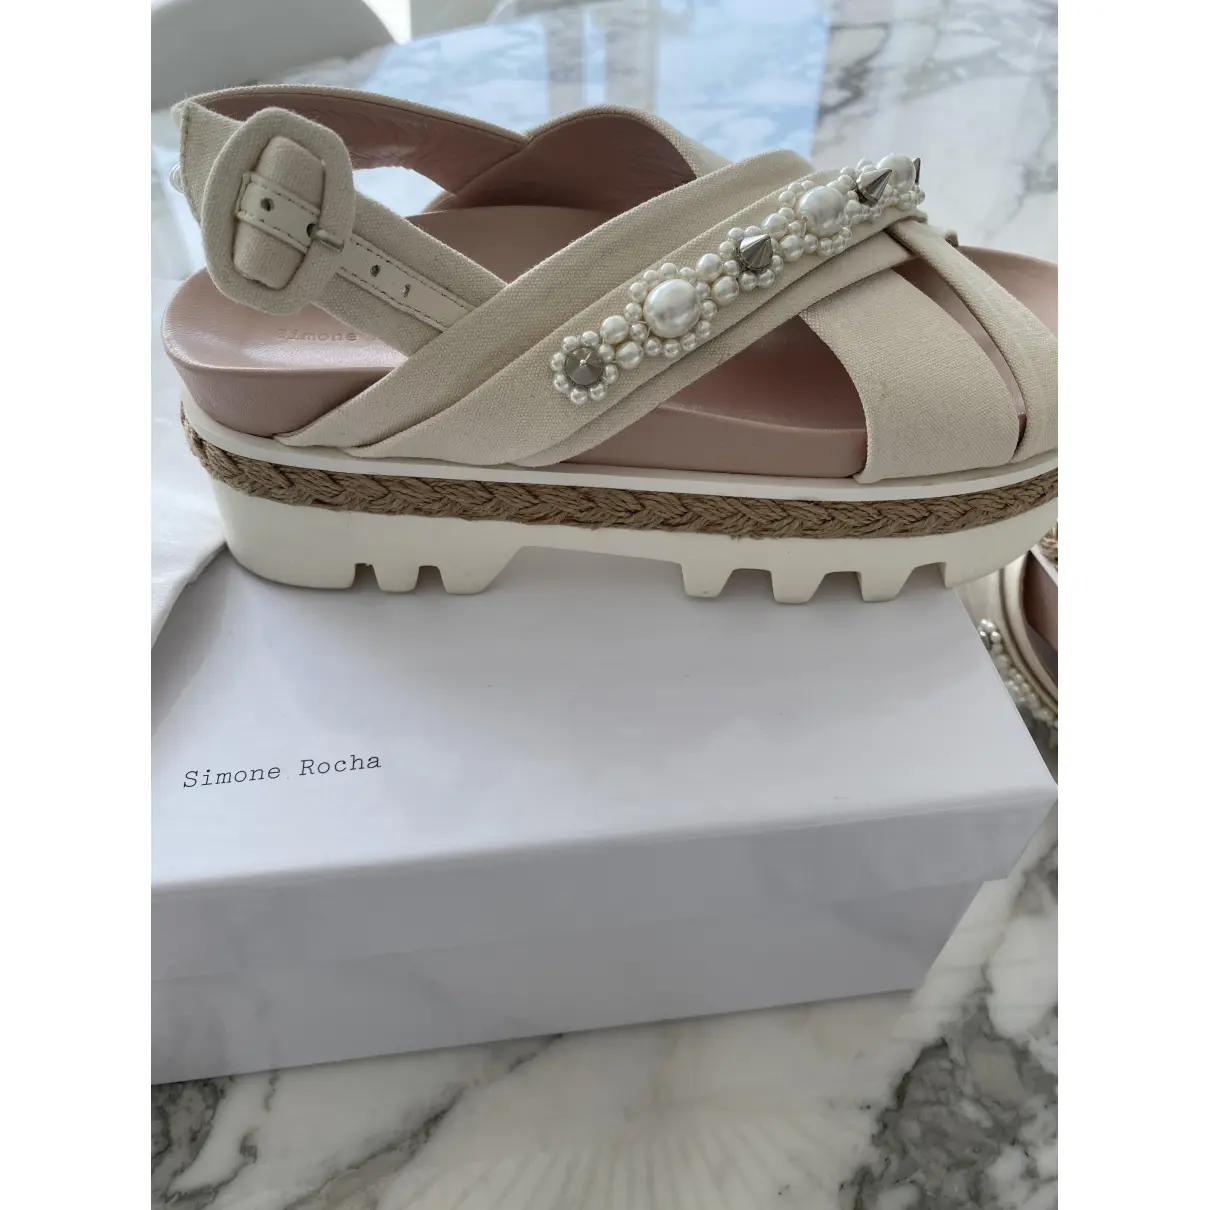 Buy Simone Rocha Cloth sandals online